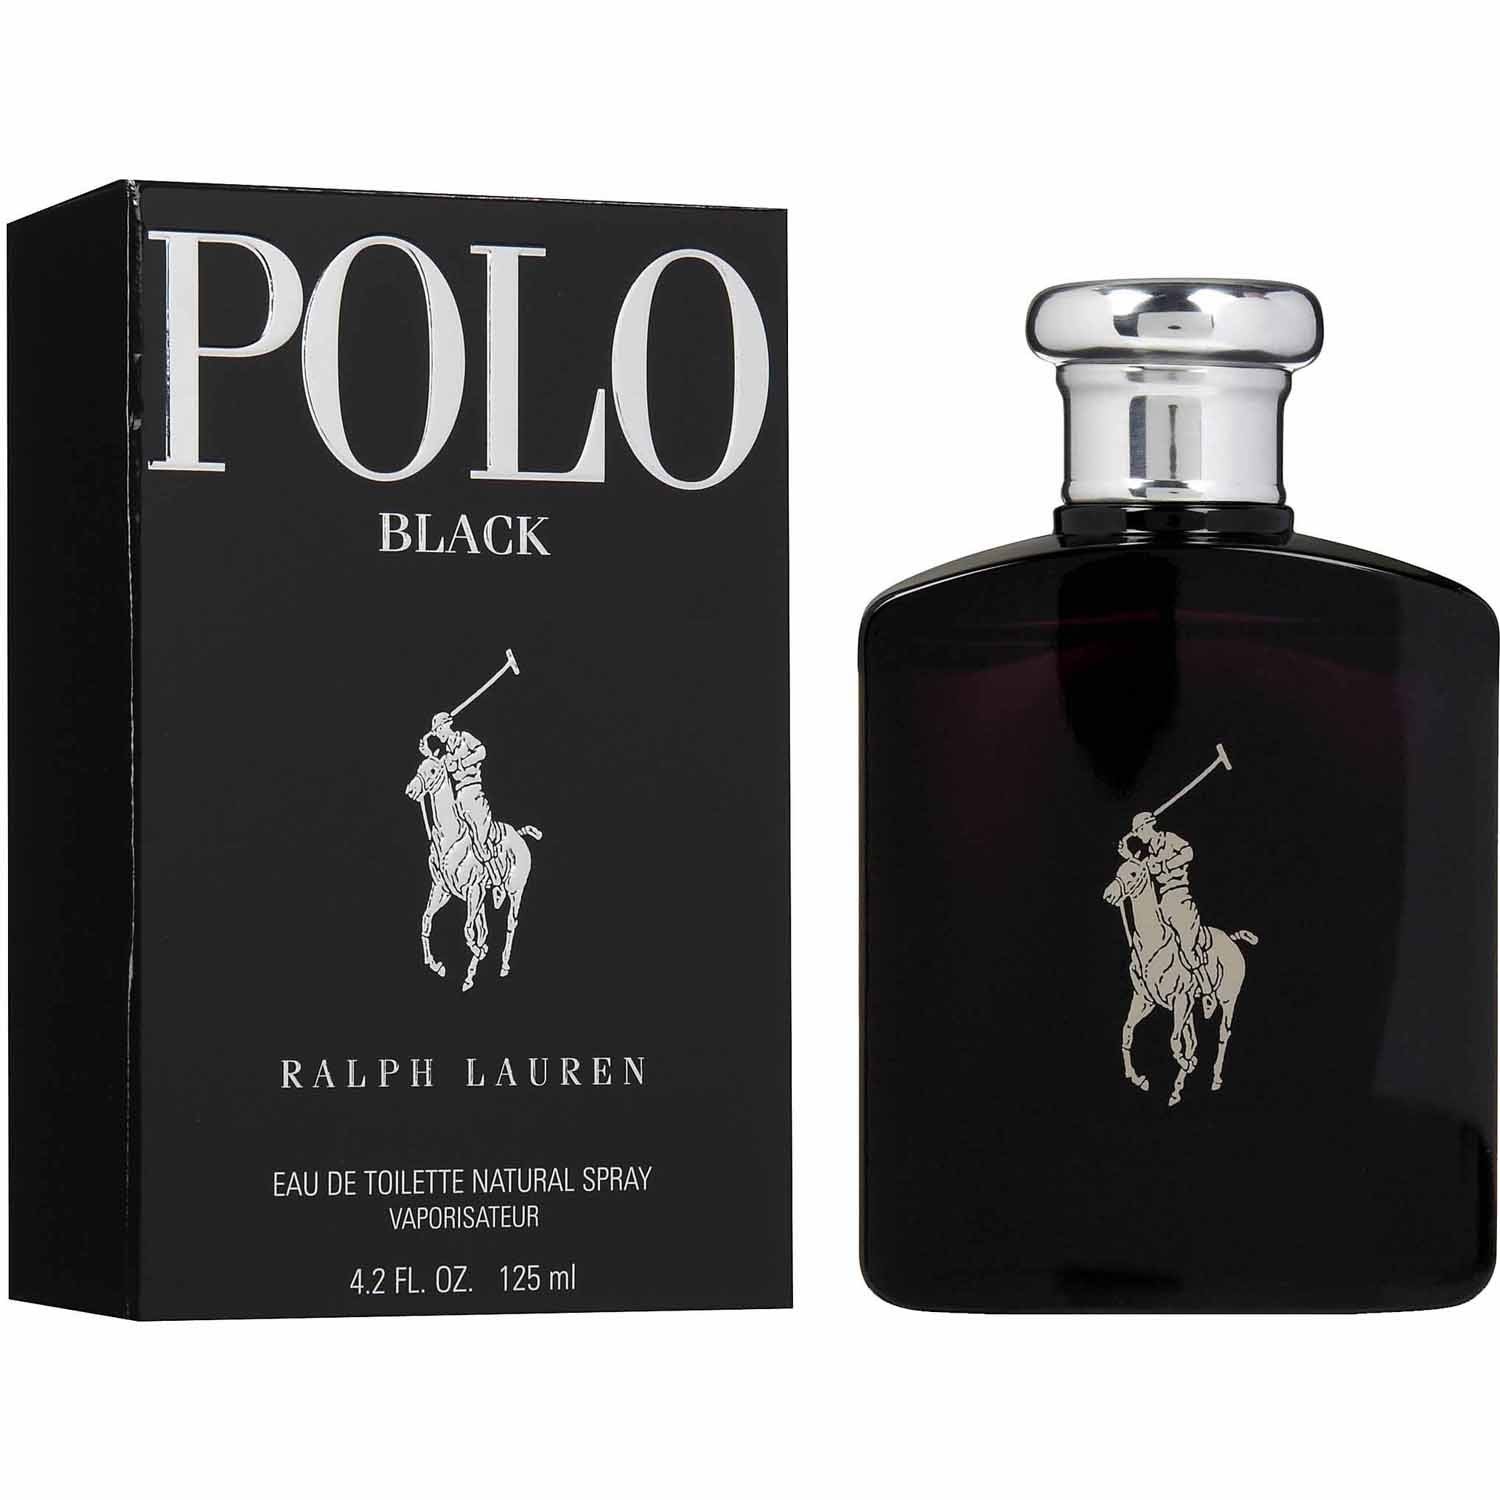 polo sport black perfume